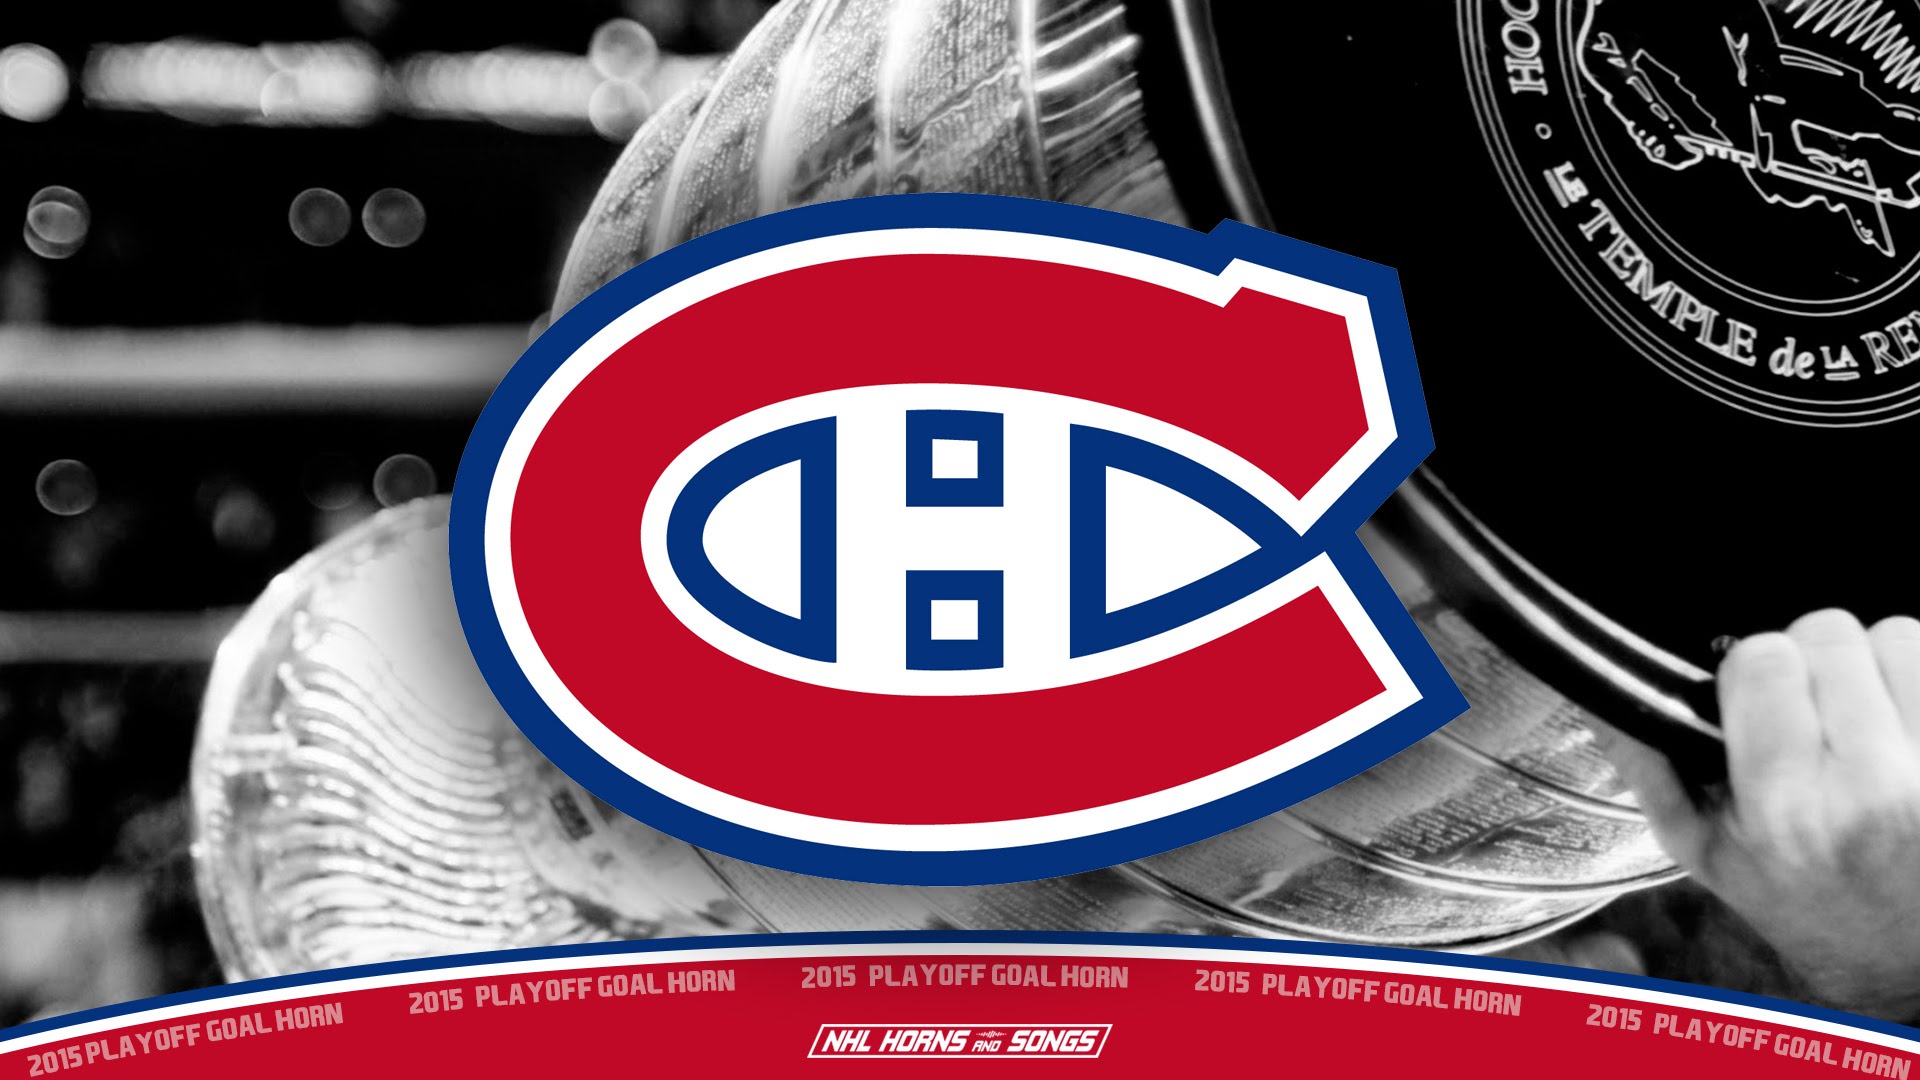 Montreal Canadiens HD wallpapers, Desktop wallpaper - most viewed